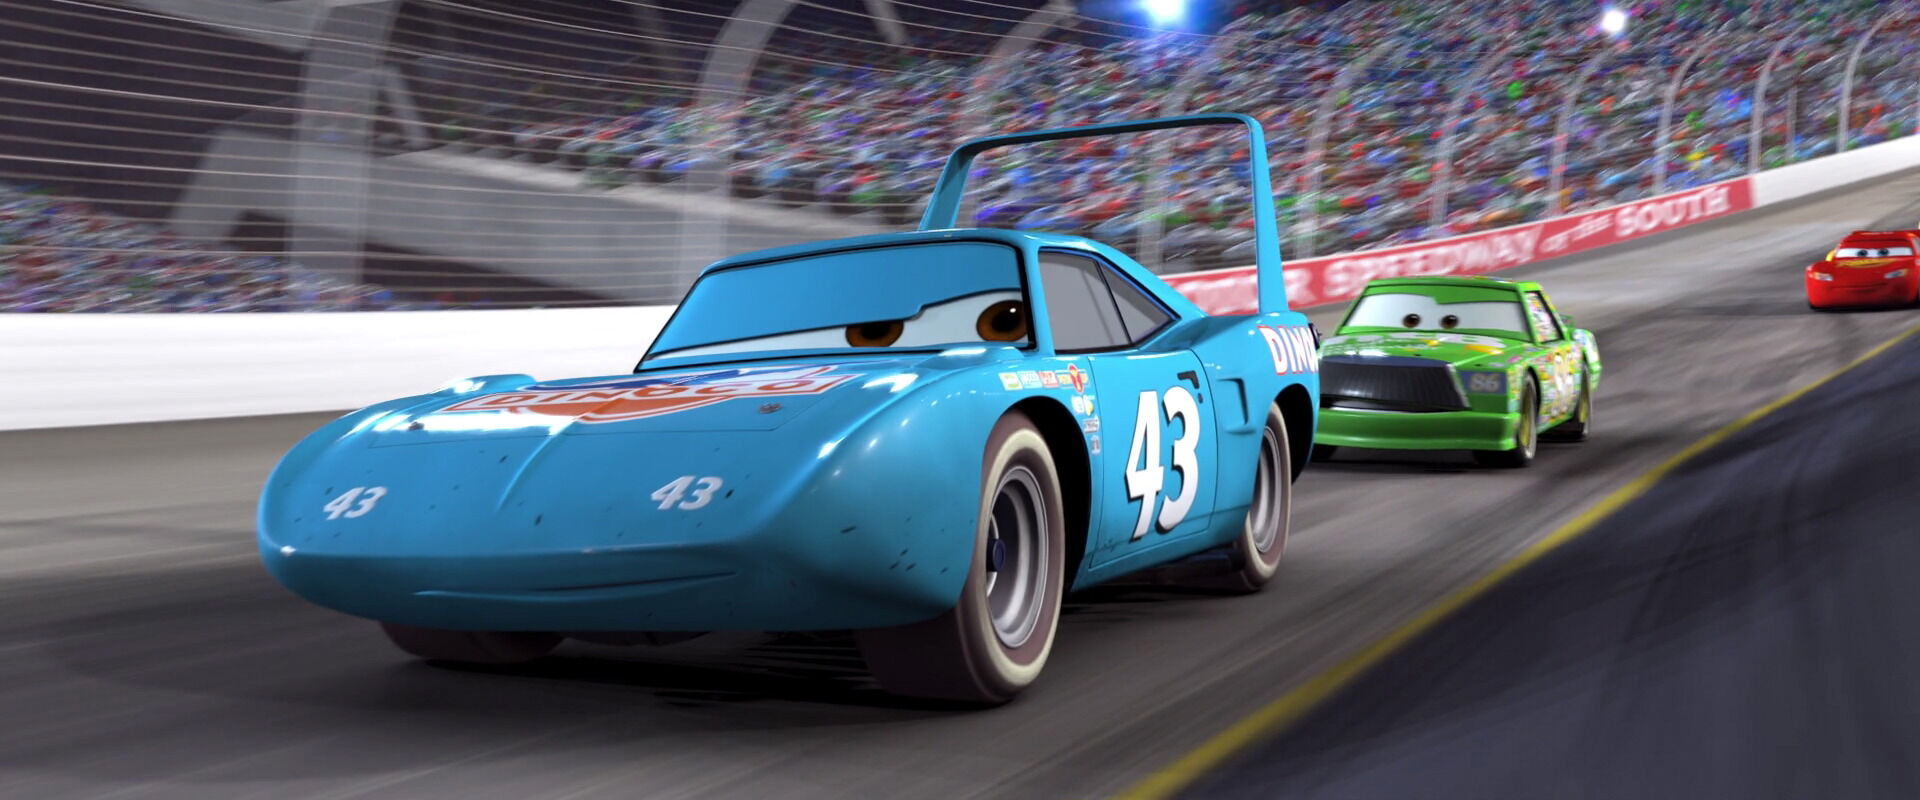 Disney FLM26 Pixar Cars-Lightning McQueen Dinoco 400, flerfärgad